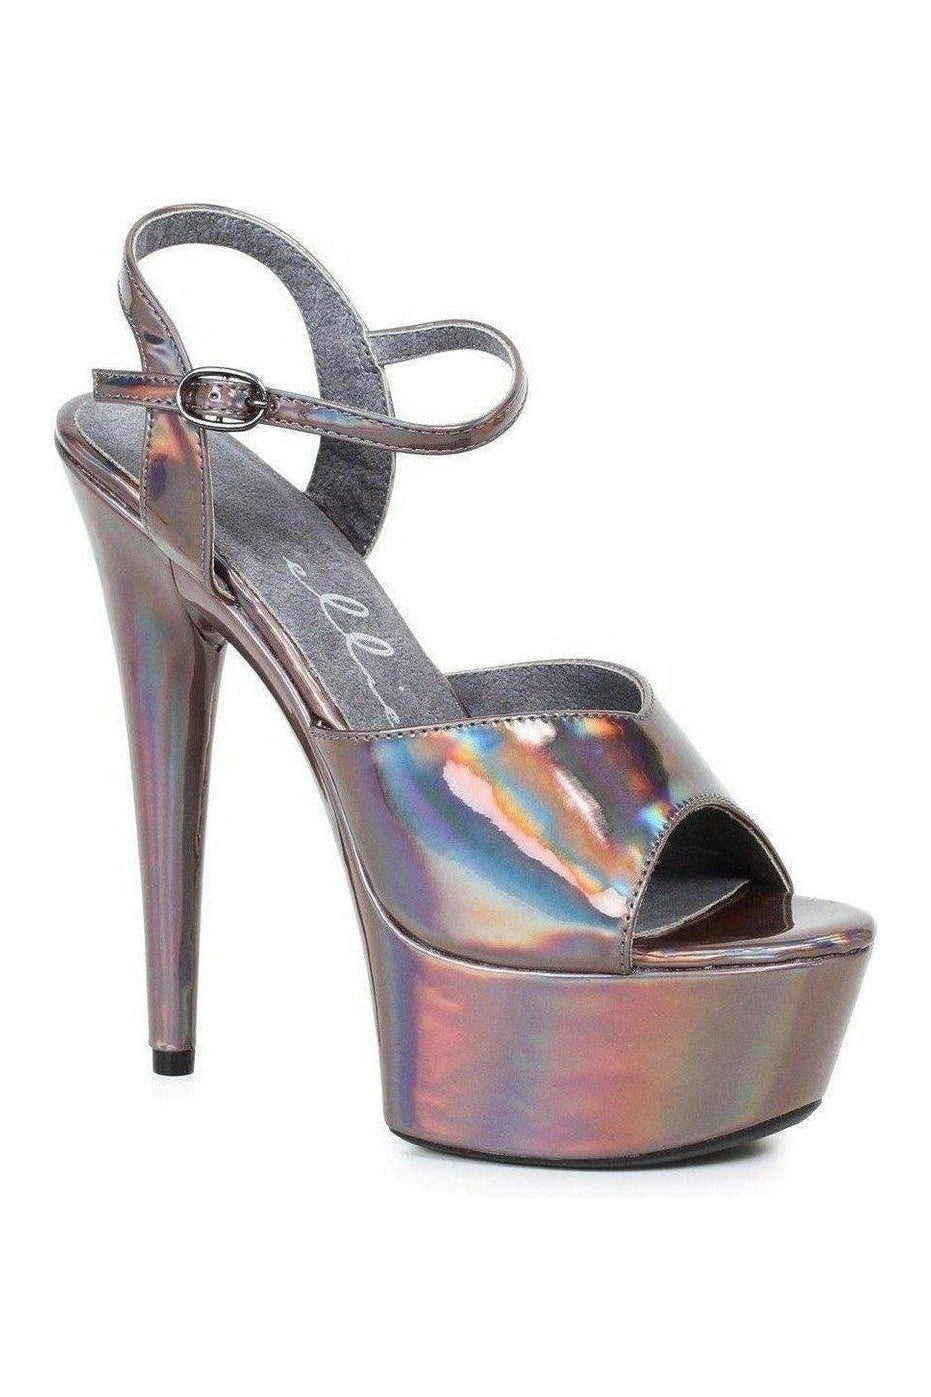 Ellie Shoes Grey Sandals Platform Stripper Shoes | Buy at Sexyshoes.com